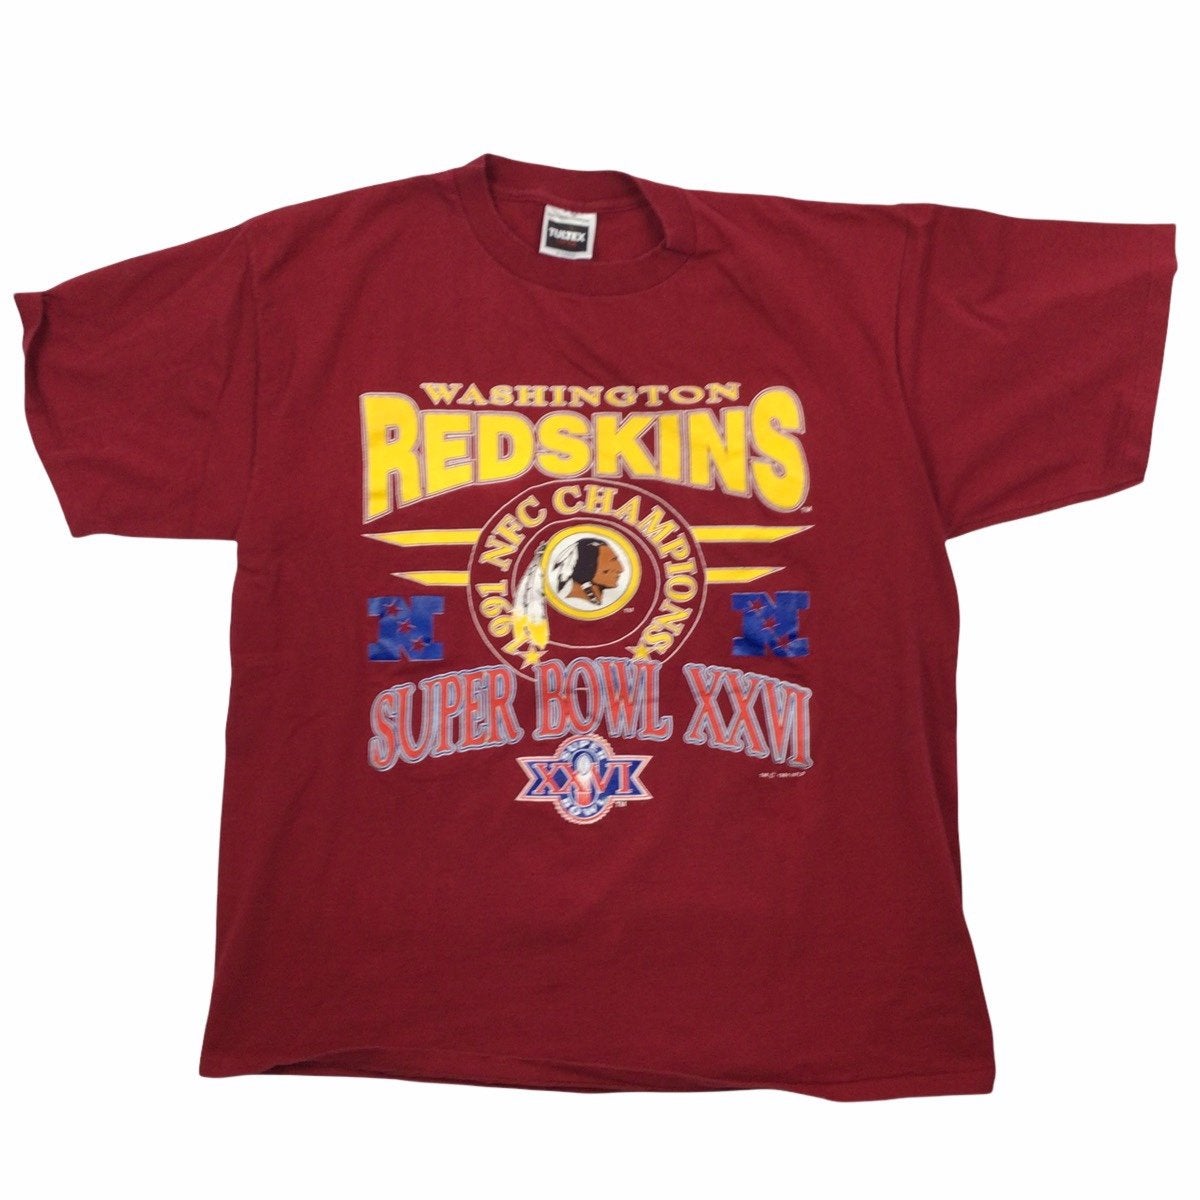 Vintage 1991 Super Bowl XXVI Washington Redskins T-shirt. Single